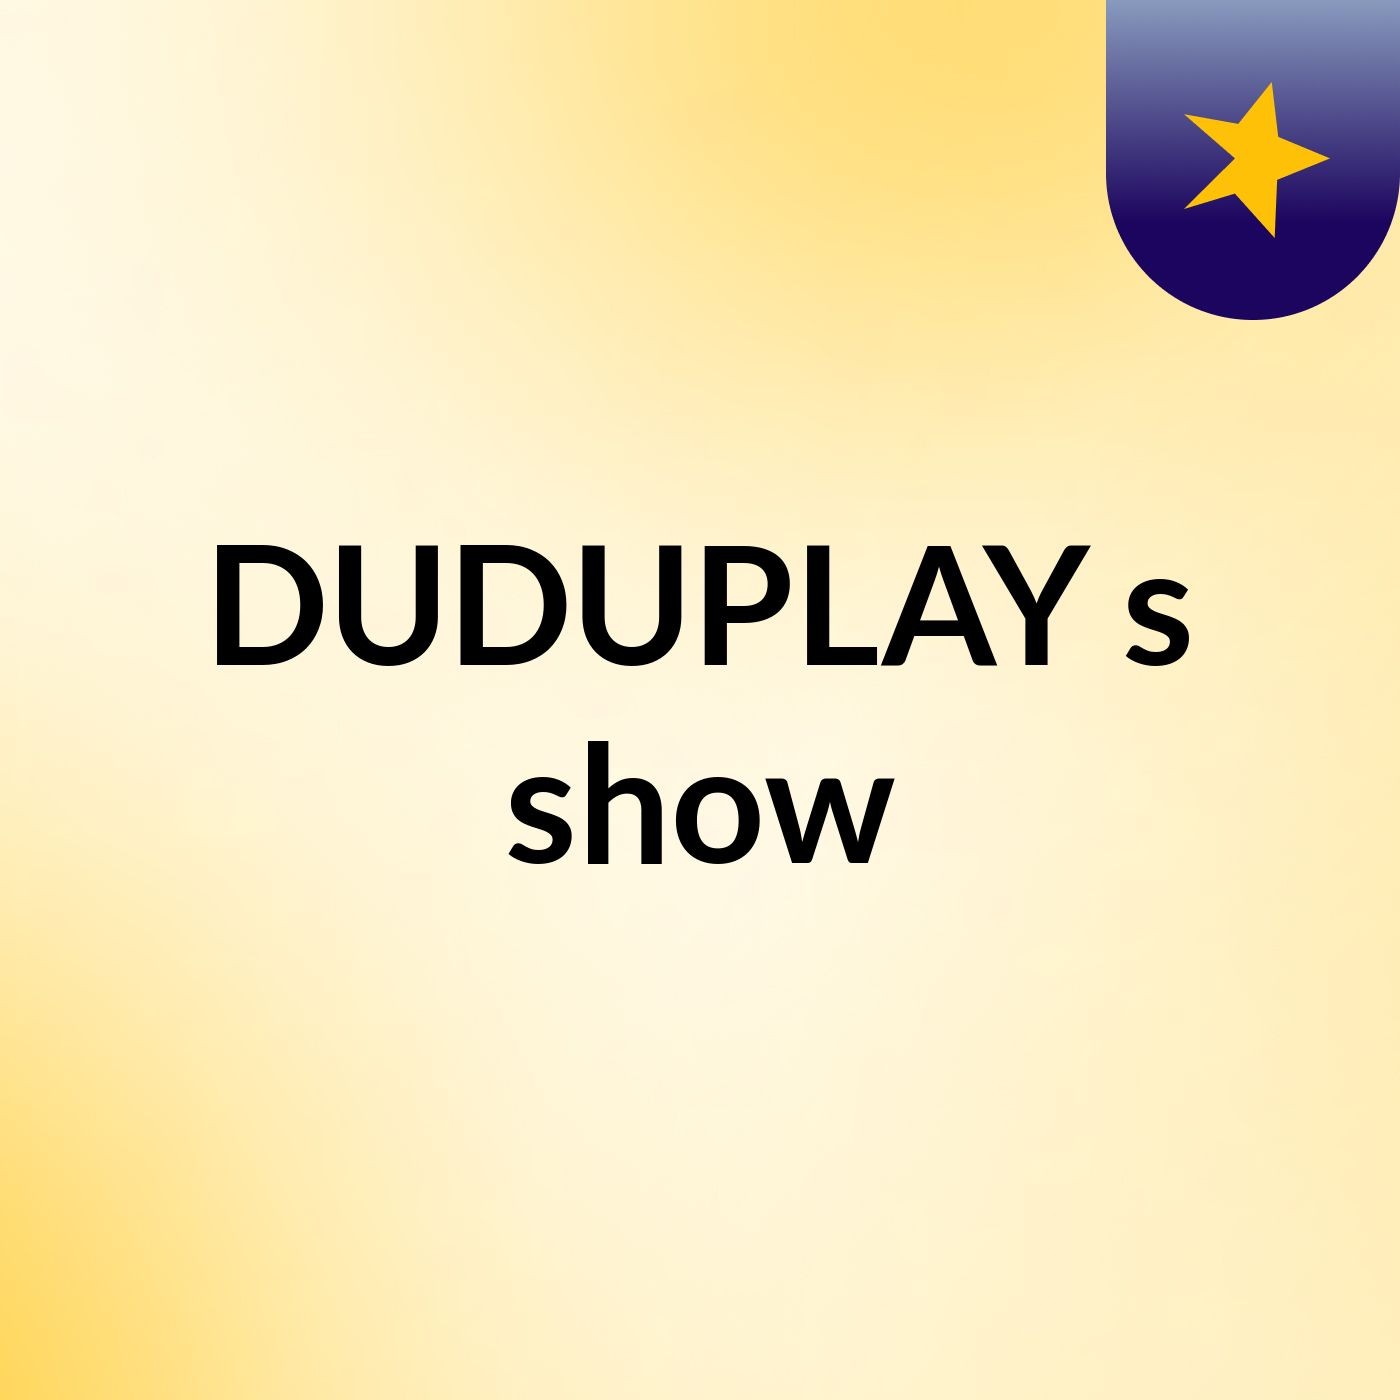 DUDUPLAY's show